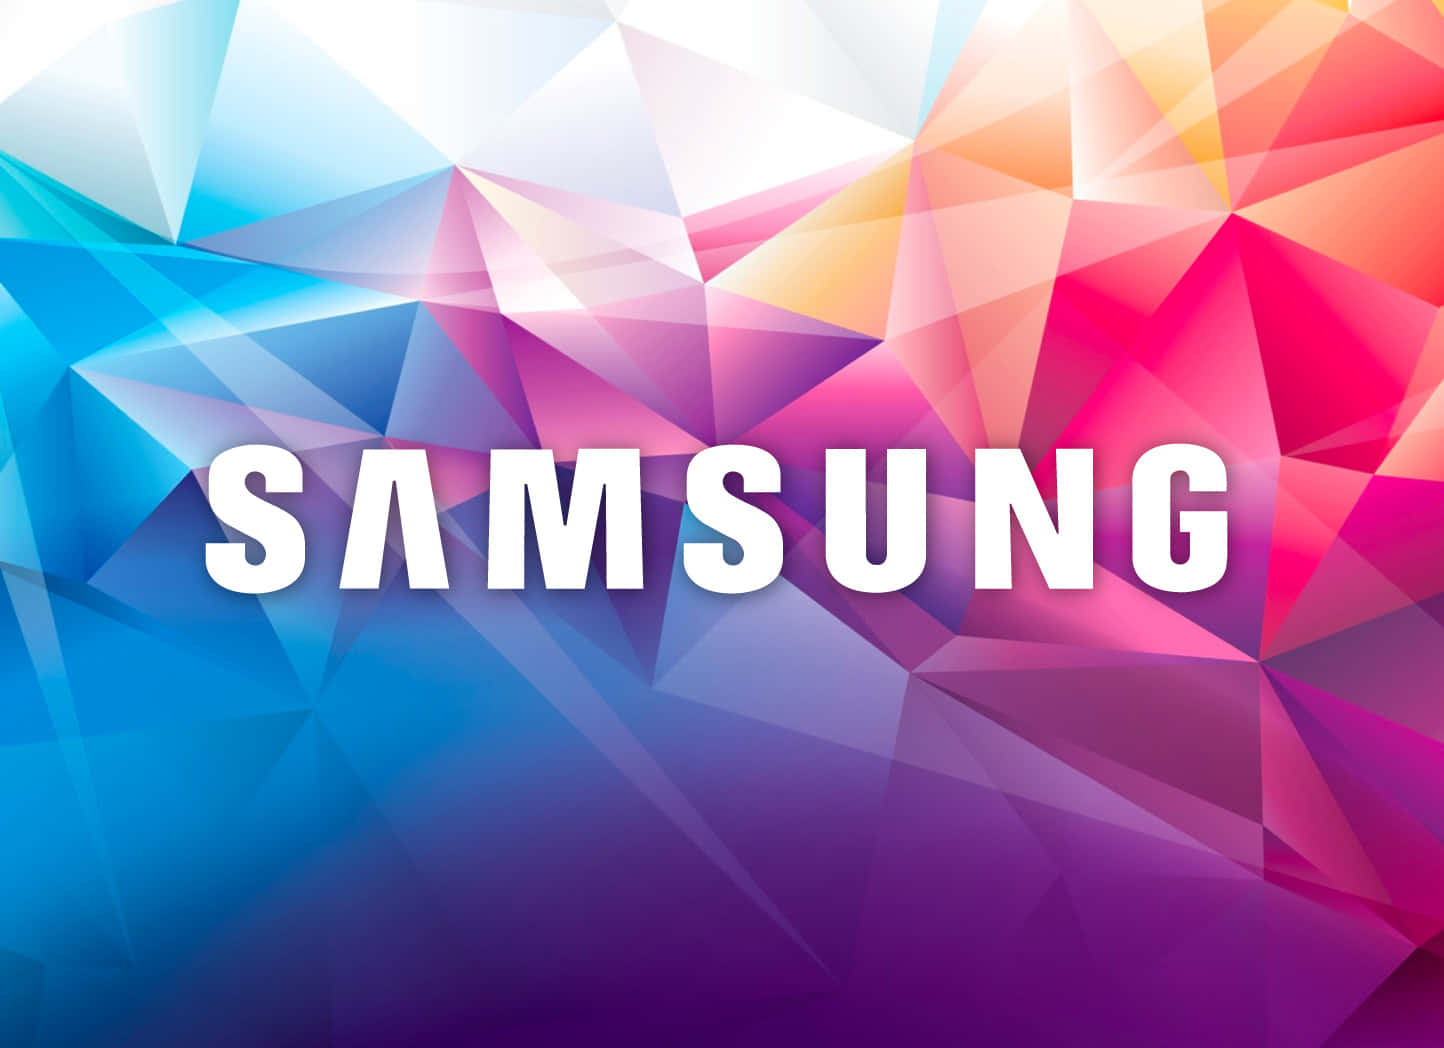 Buntesgeometrisches Samsung-logo-bild